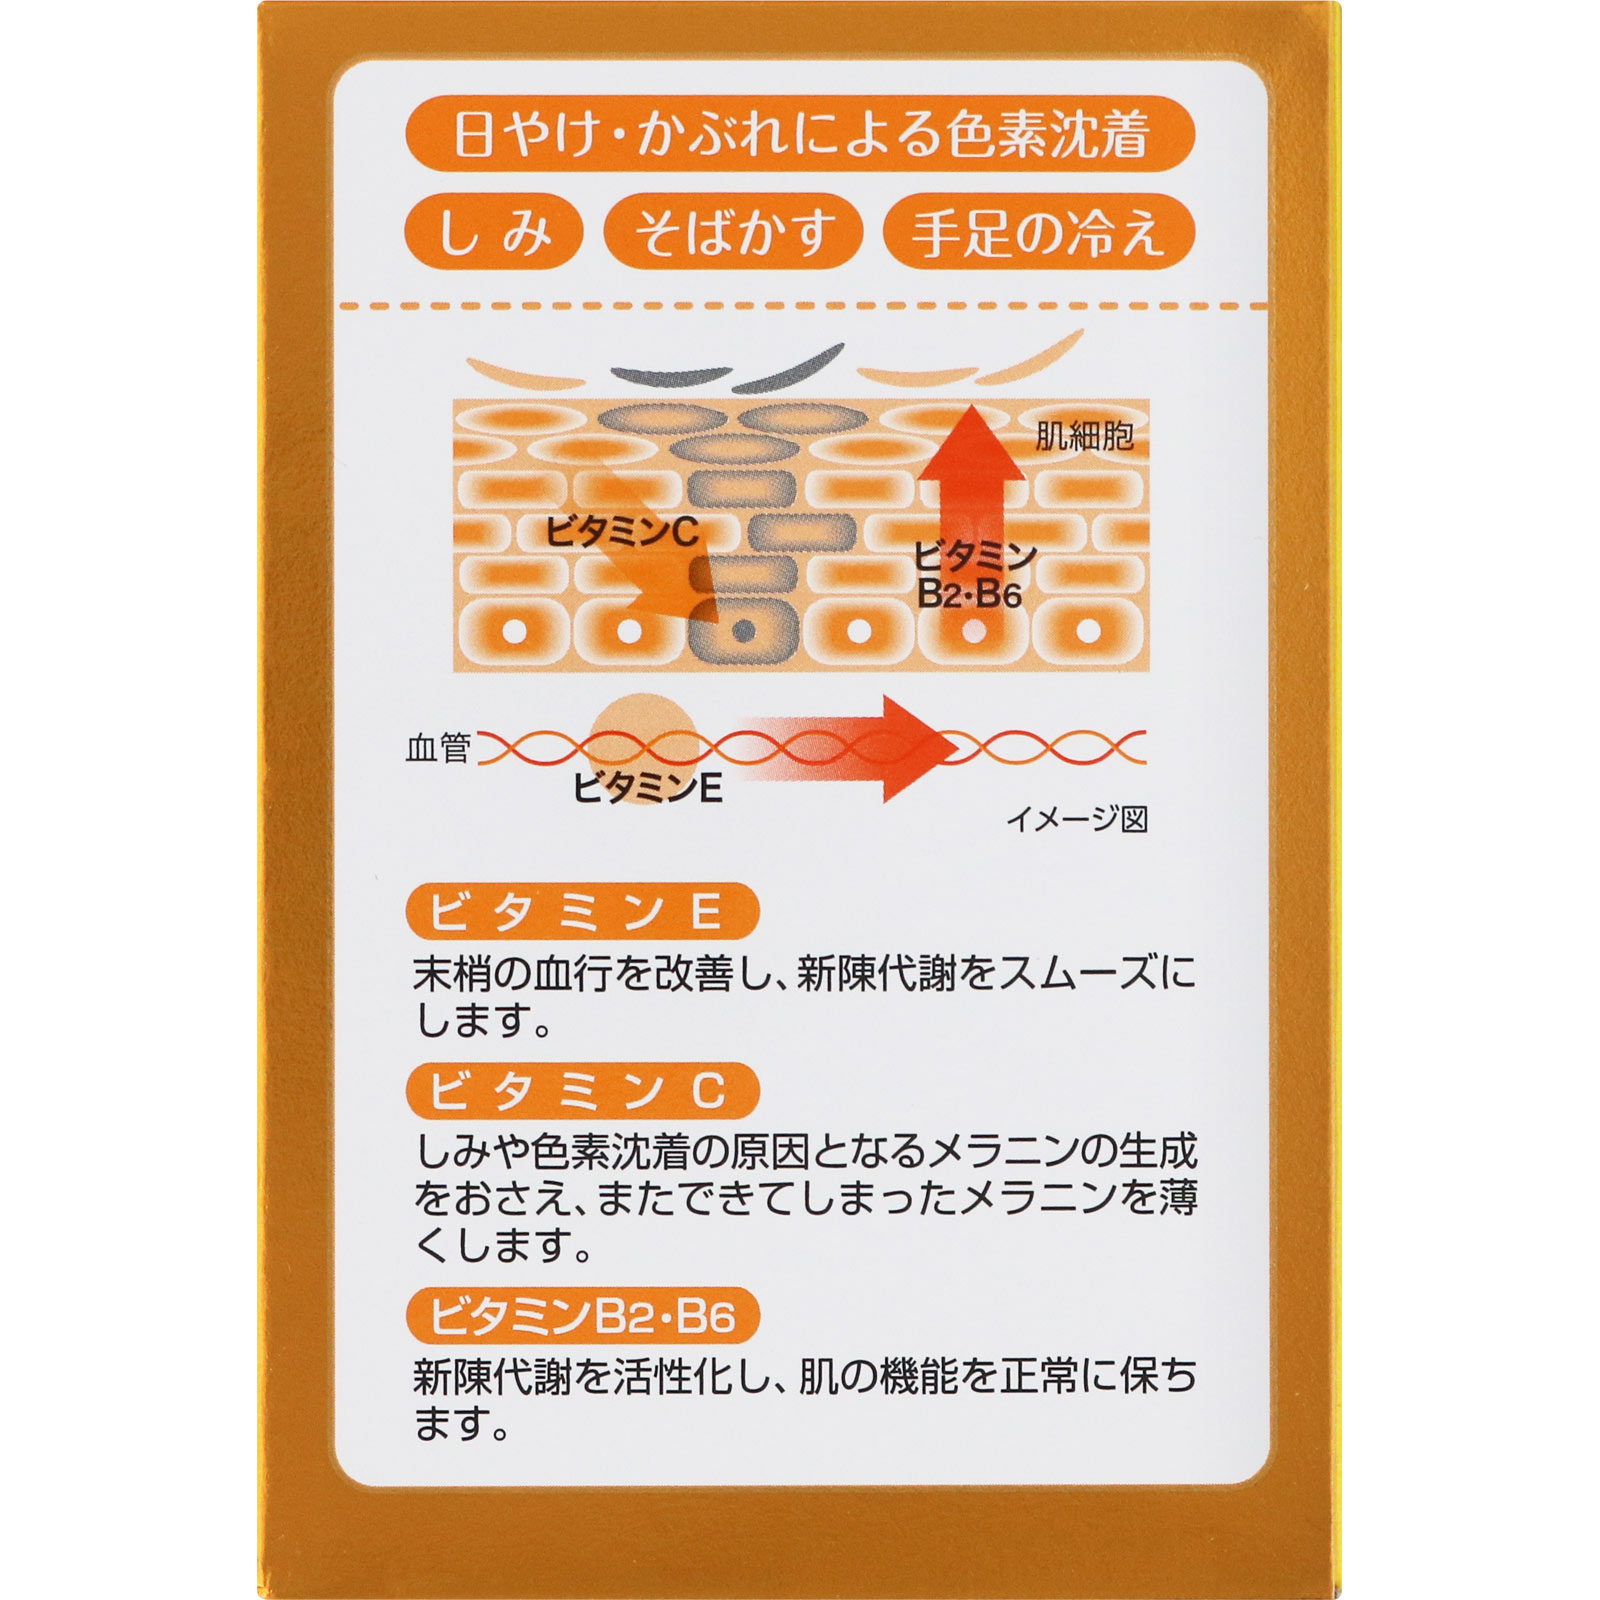 matsukiyo ＮＥＷエバレッシュＥＣ ８０包 【第3類医薬品】